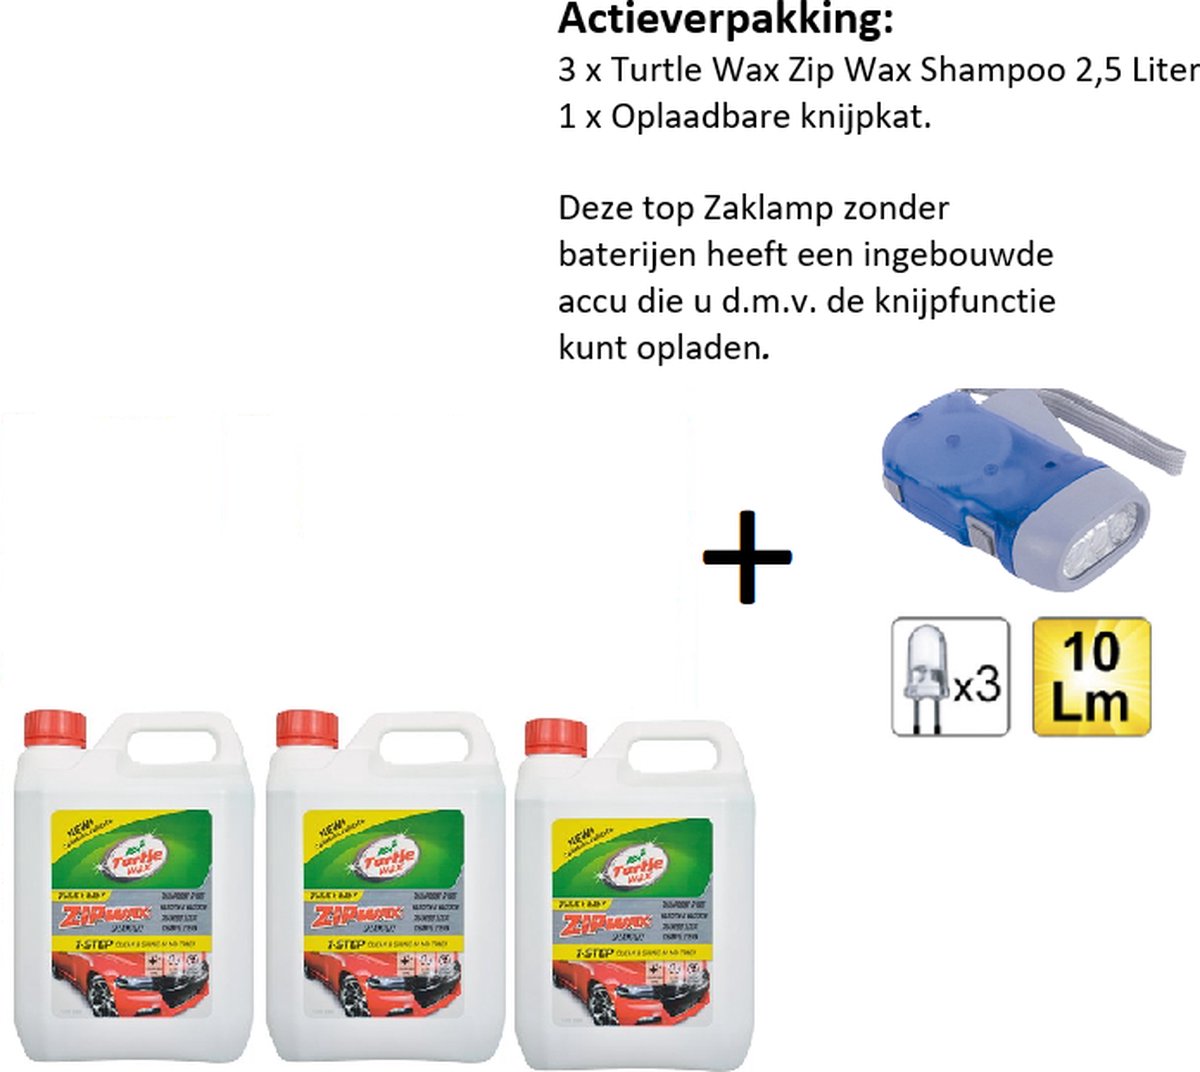 Turtle Wax - TW 52882 Zip Wax Shampoo 2.5L - 3 stuks - + Zaklamp/Knijpkat